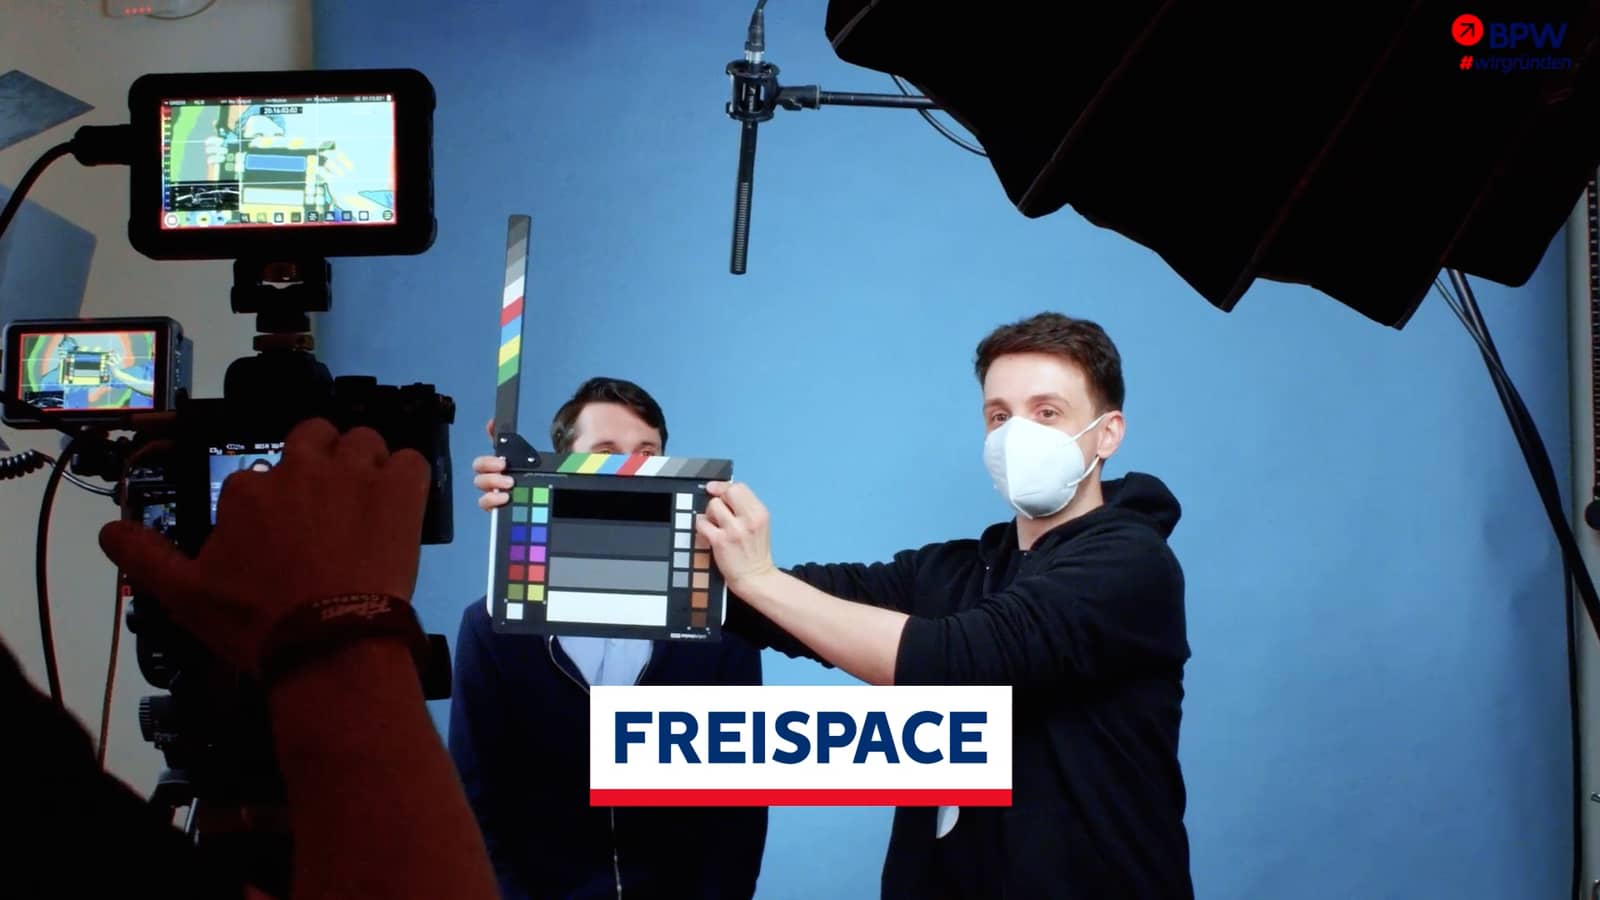 freispace Video Materials